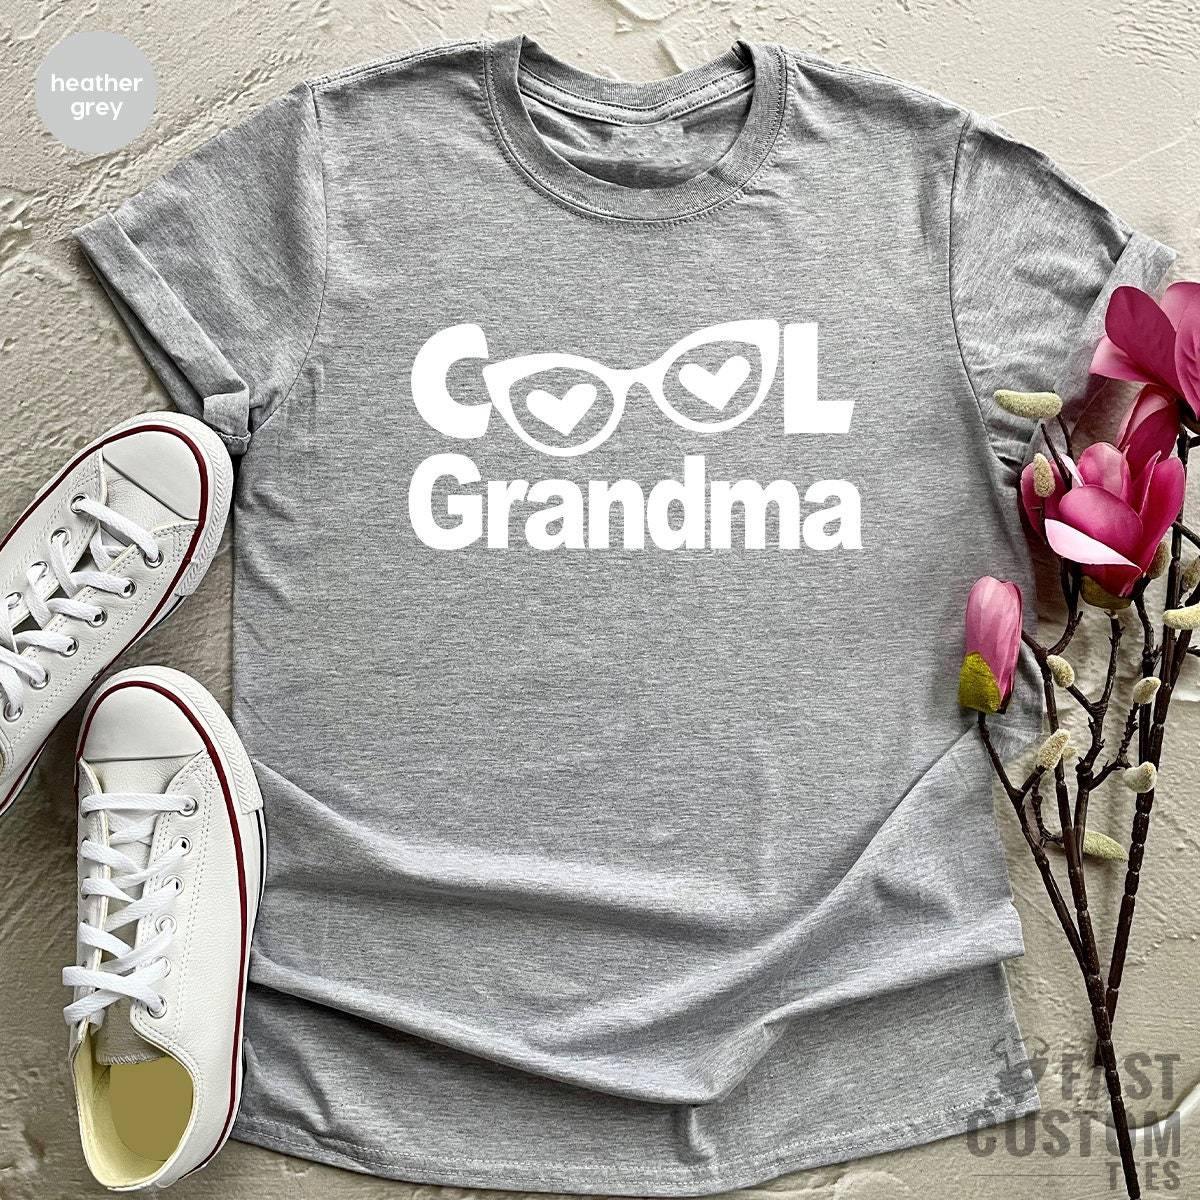 Cool Grandma Shirt, Grandma TShirt, Funny Grandma Shirts, Grandmother Gifts, Gigi T Shirt, Nana Mothers Day Gifts, Best Nana T Shirt - Fastdeliverytees.com